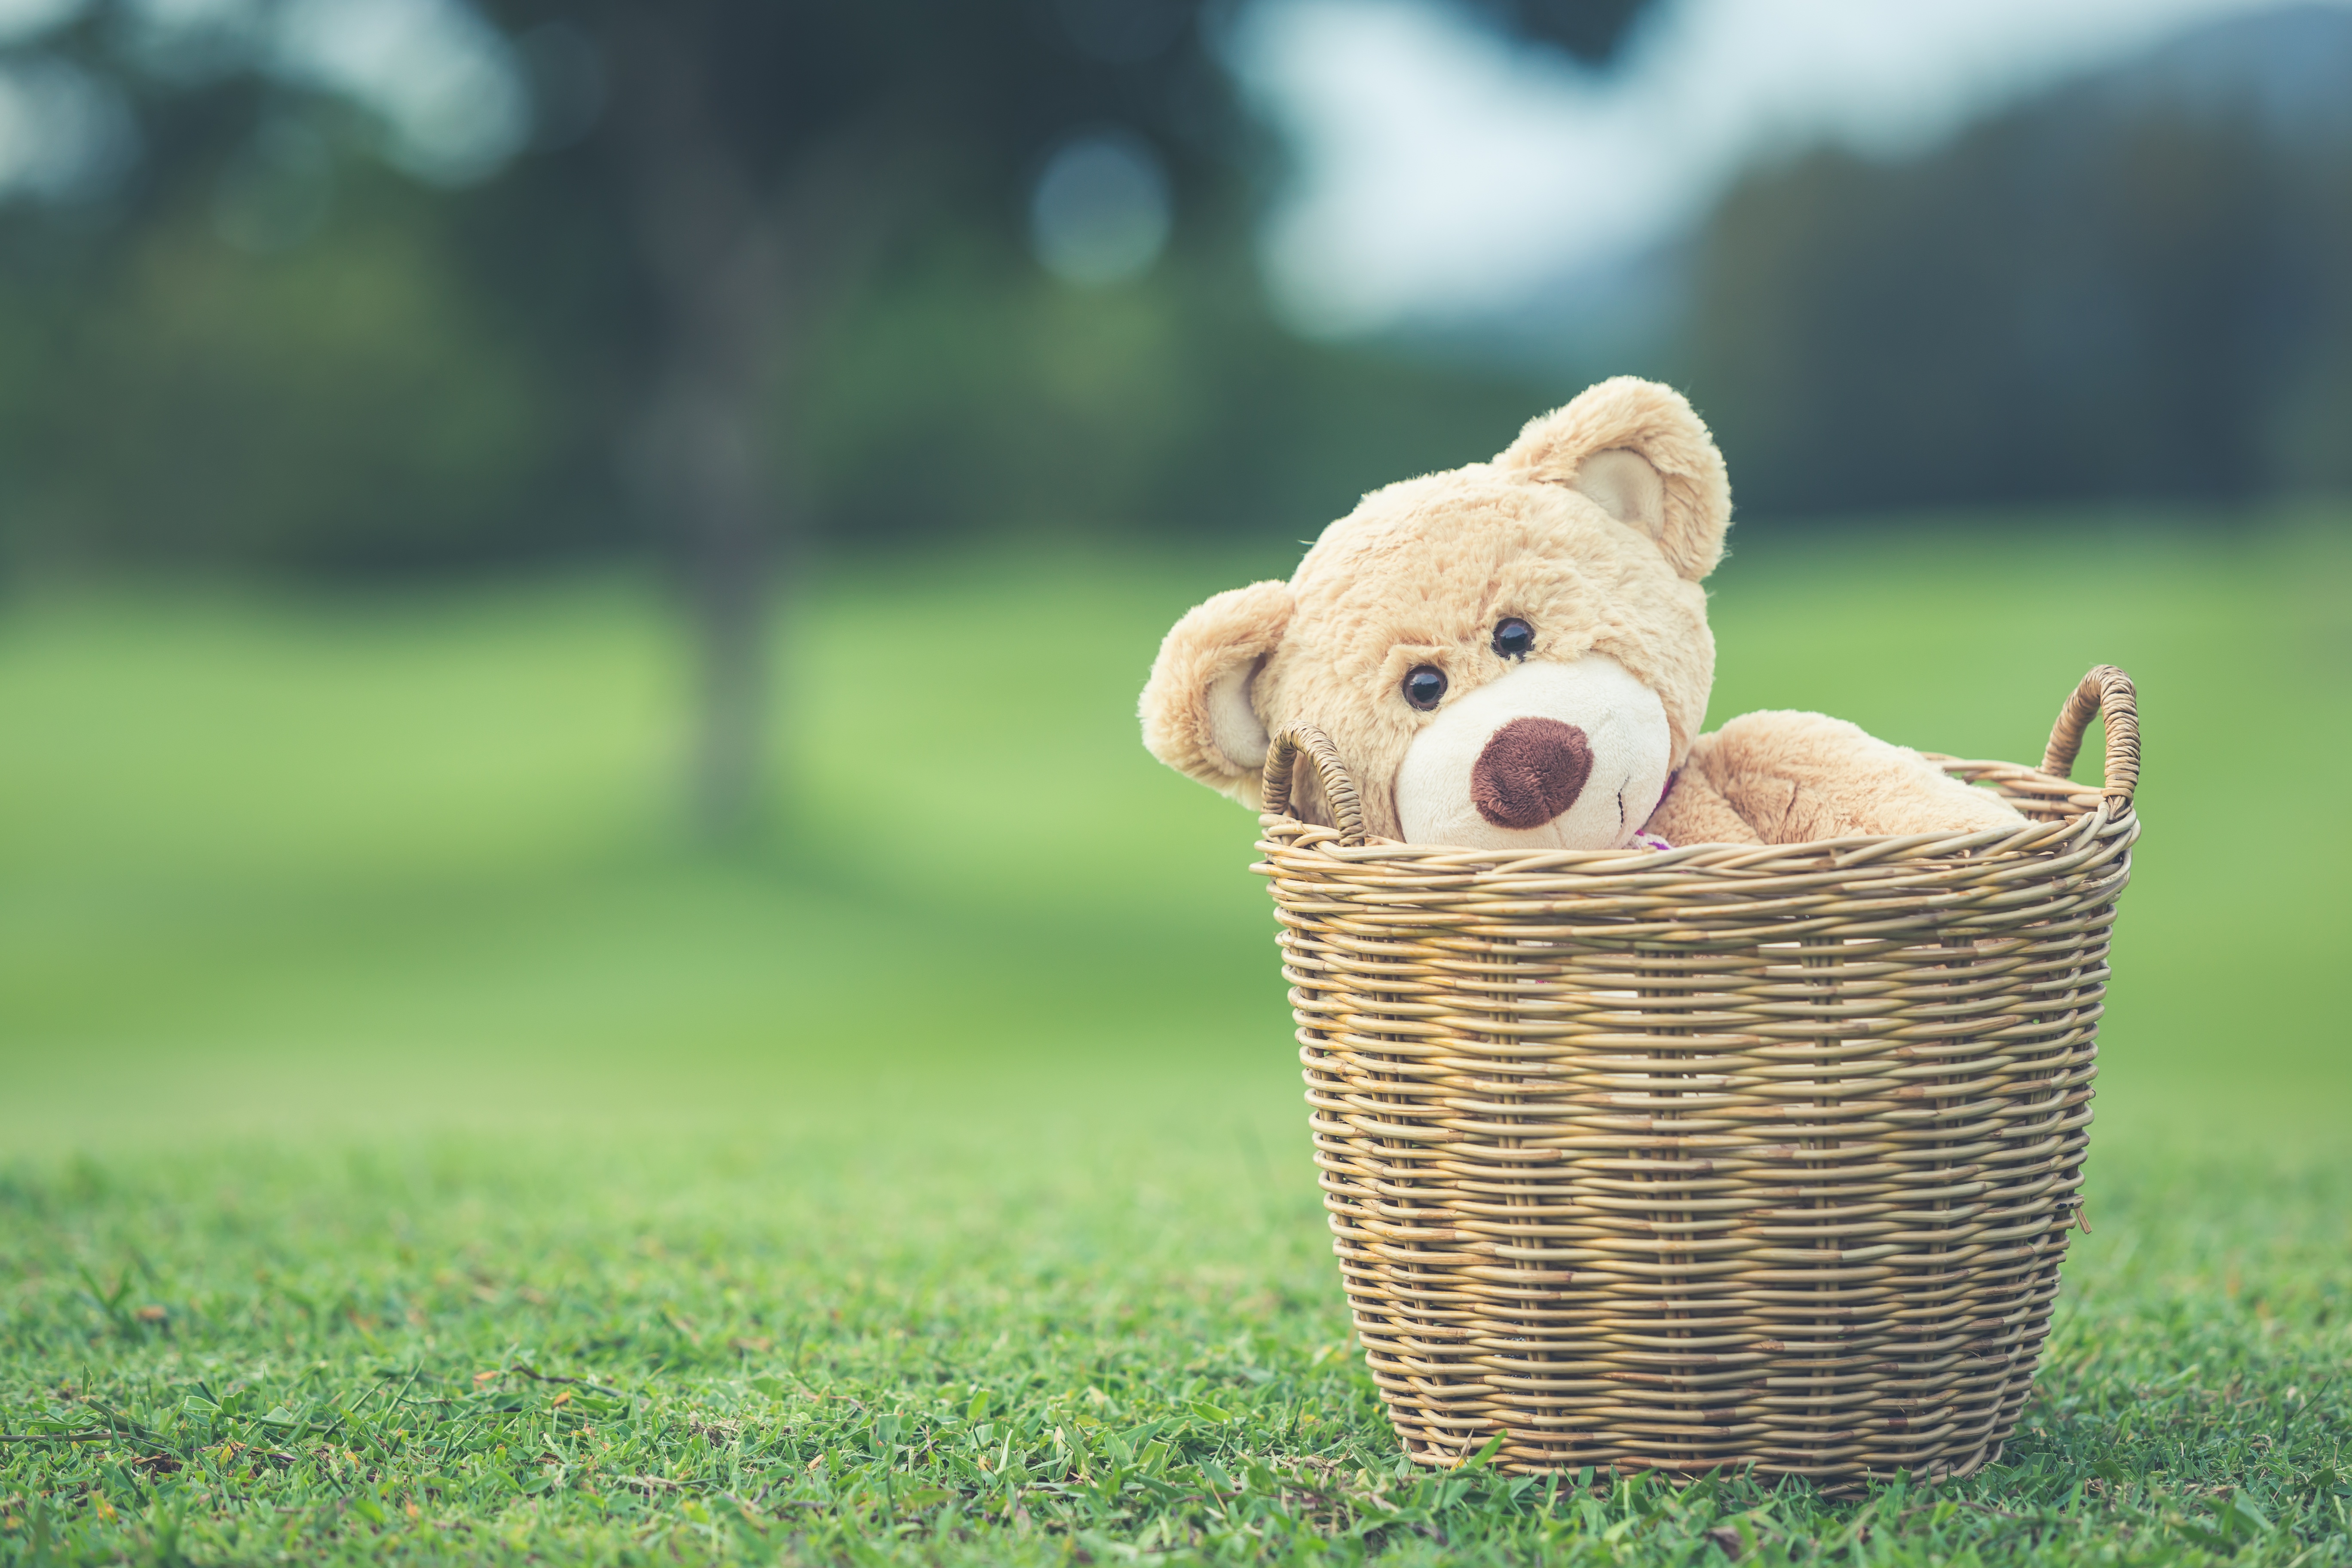 Basket Depth Of Field Stuffed Animal Teddy Bear 5472x3648